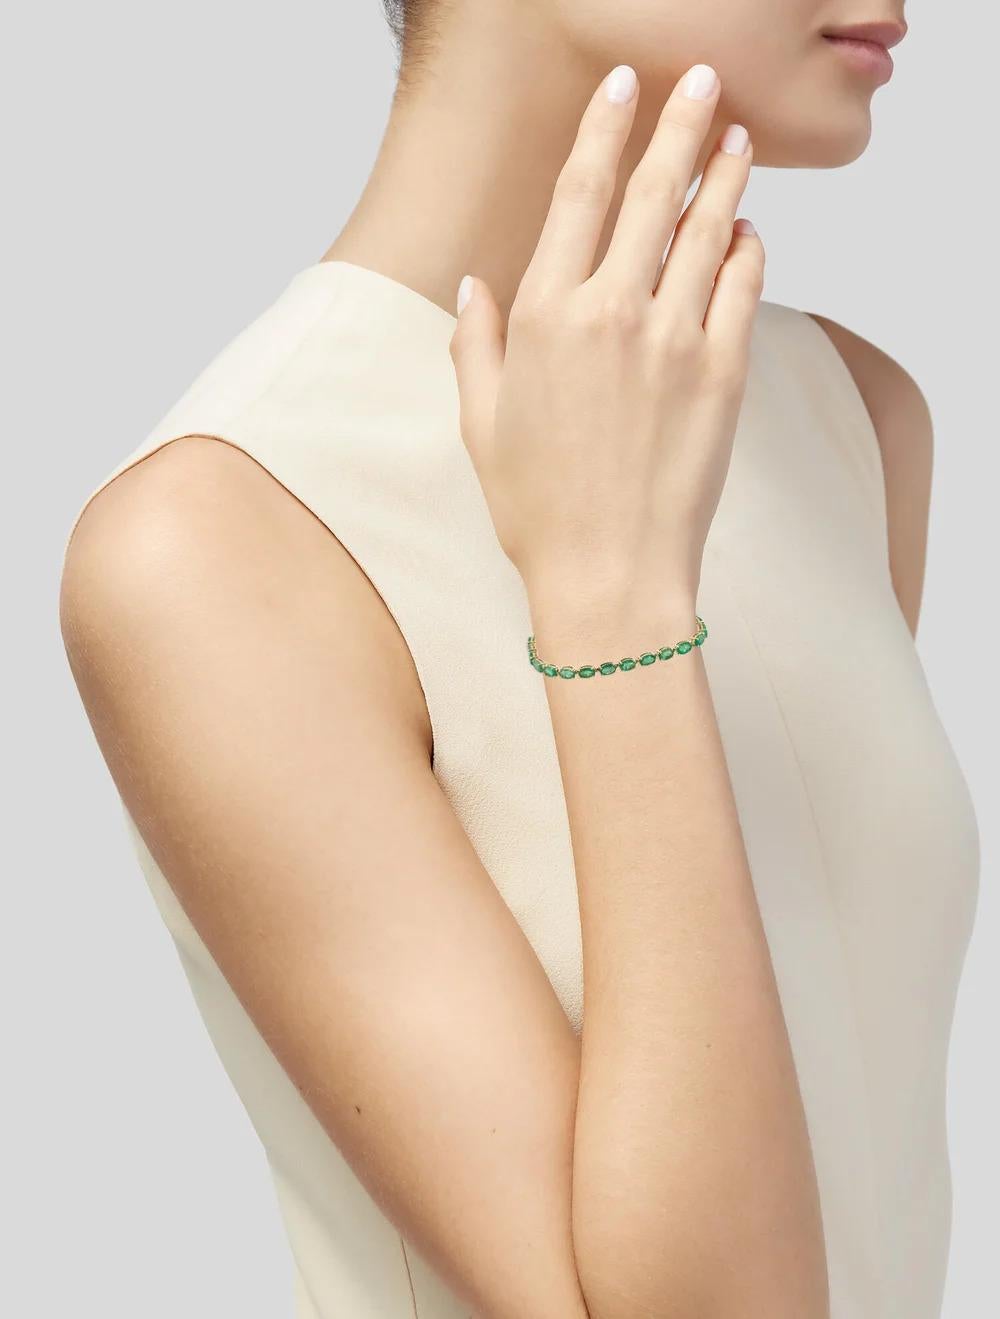 Oval Cut 14K Gold 10.40ctw Emerald Link Bracelet - Fine Jewelry Piece, Stunning Design For Sale